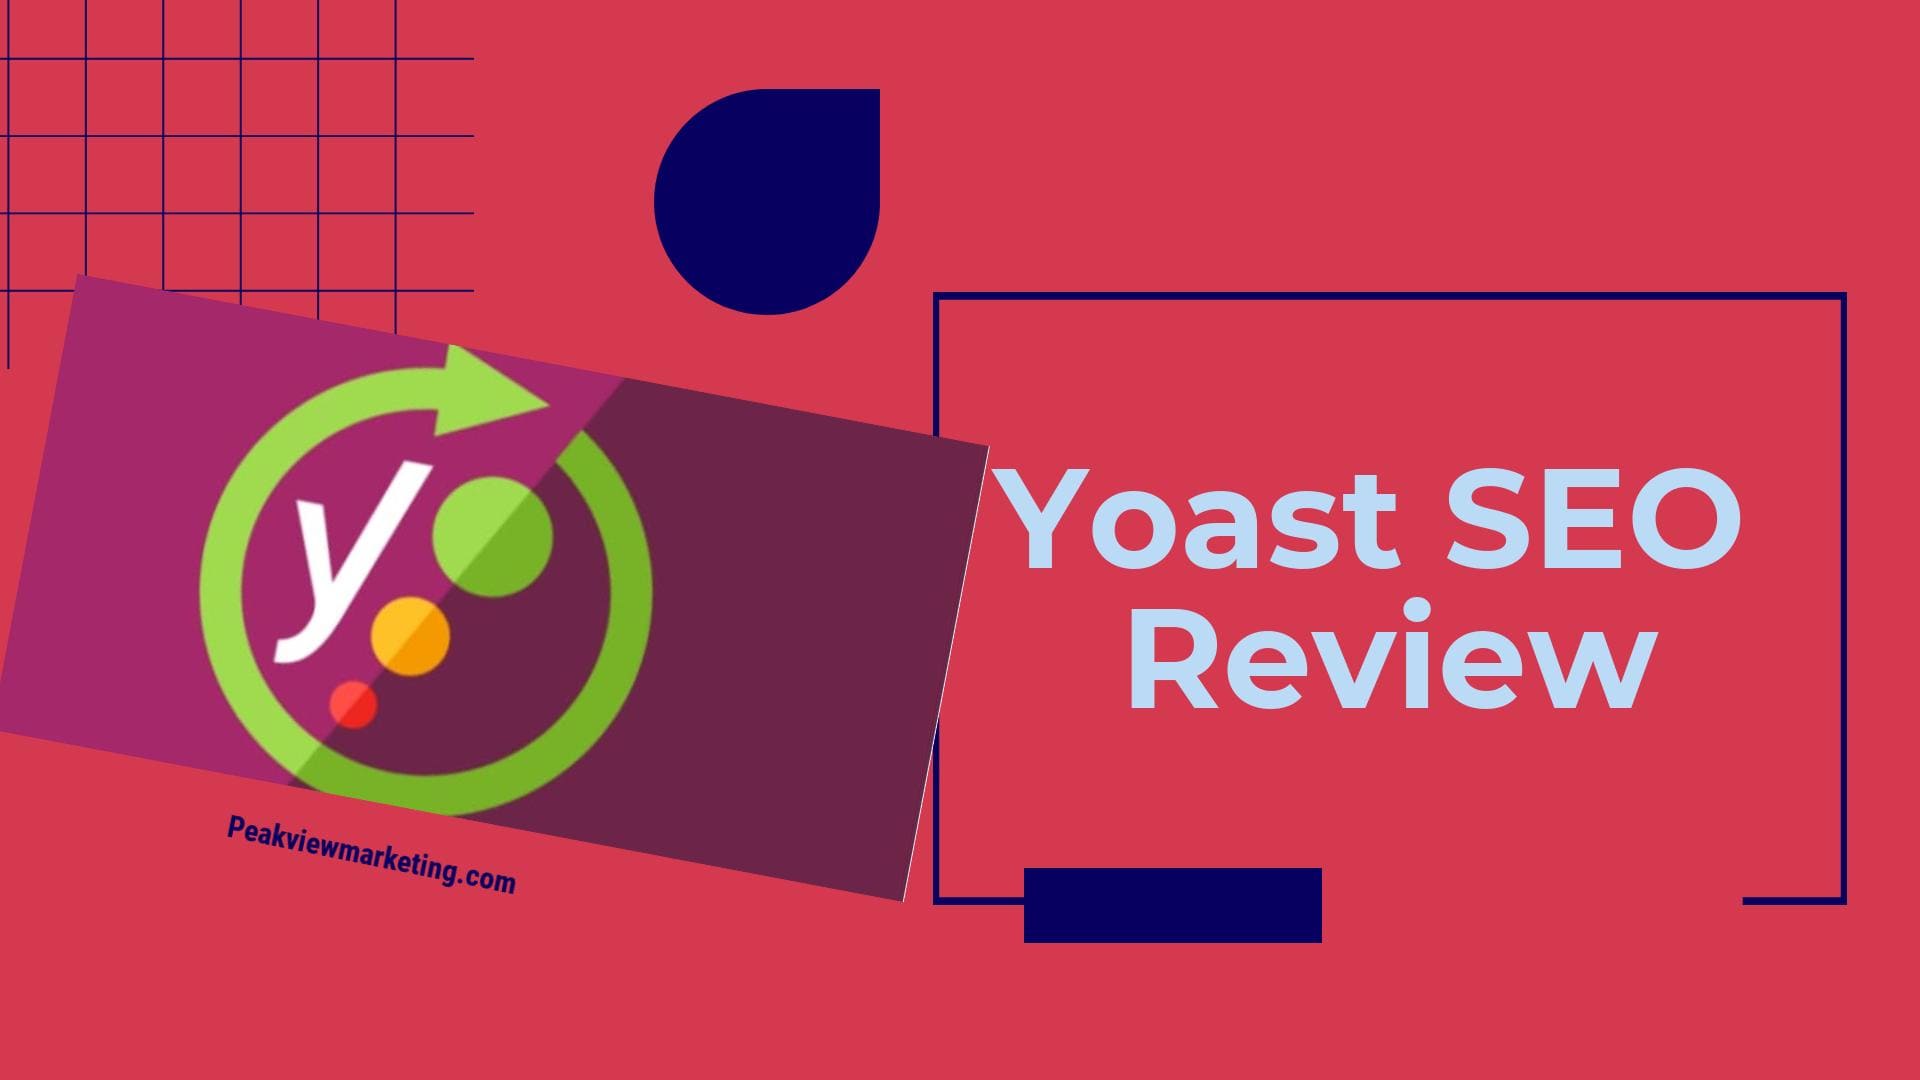 Yoast SEO Review Image